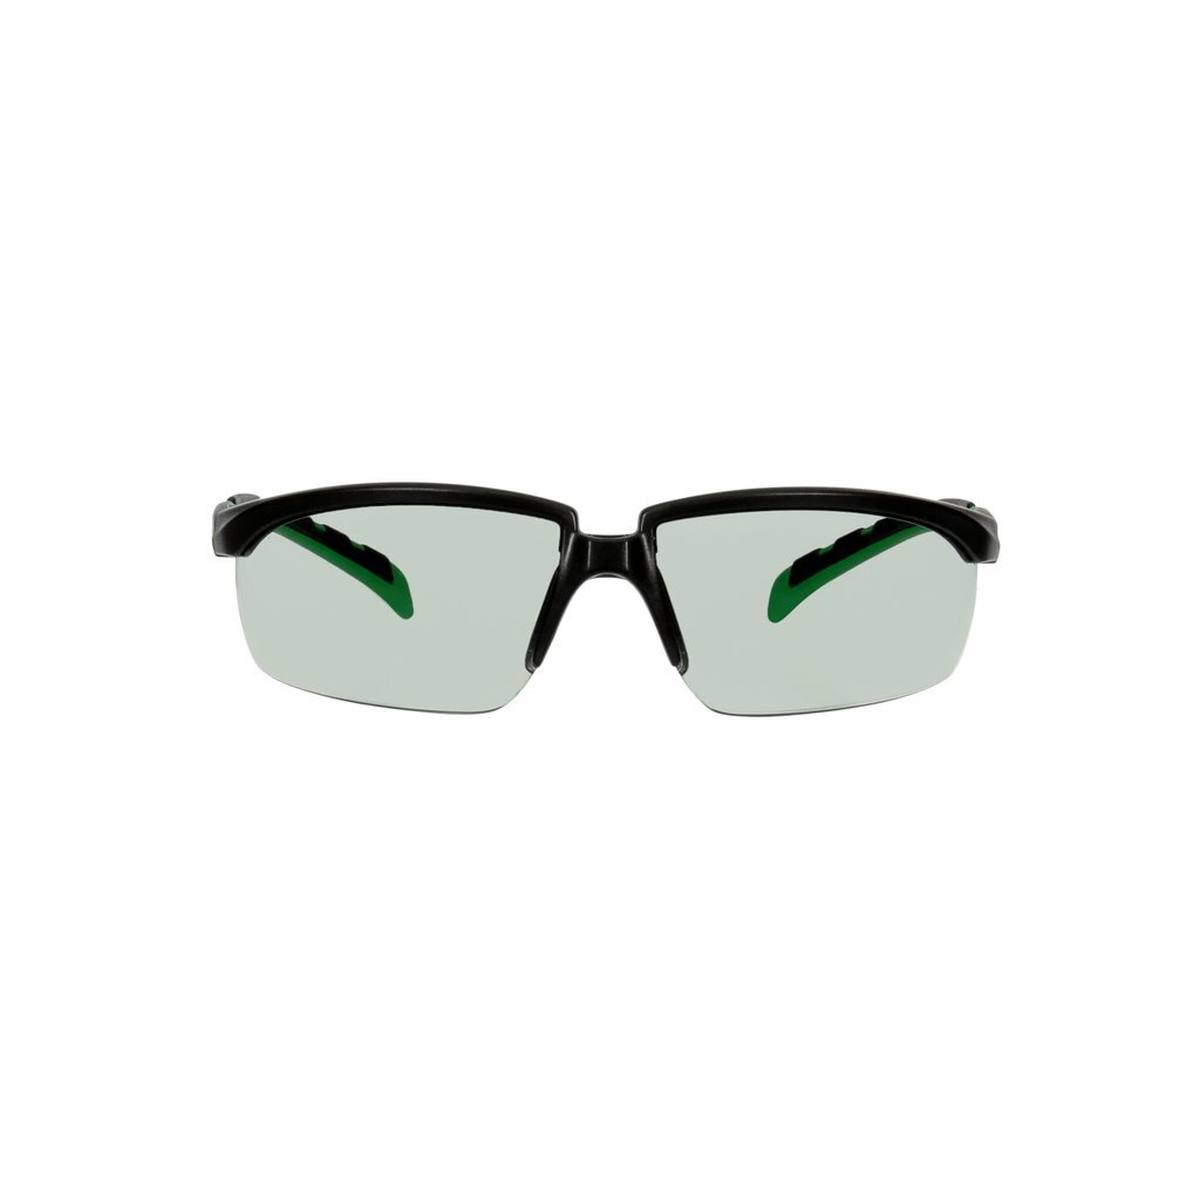 occhiali di sicurezza 3M Solus 2000, montatura nera/verde, rivestimento antigraffio + (K), lente grigia IR 1.7, S2017ASP-BLK